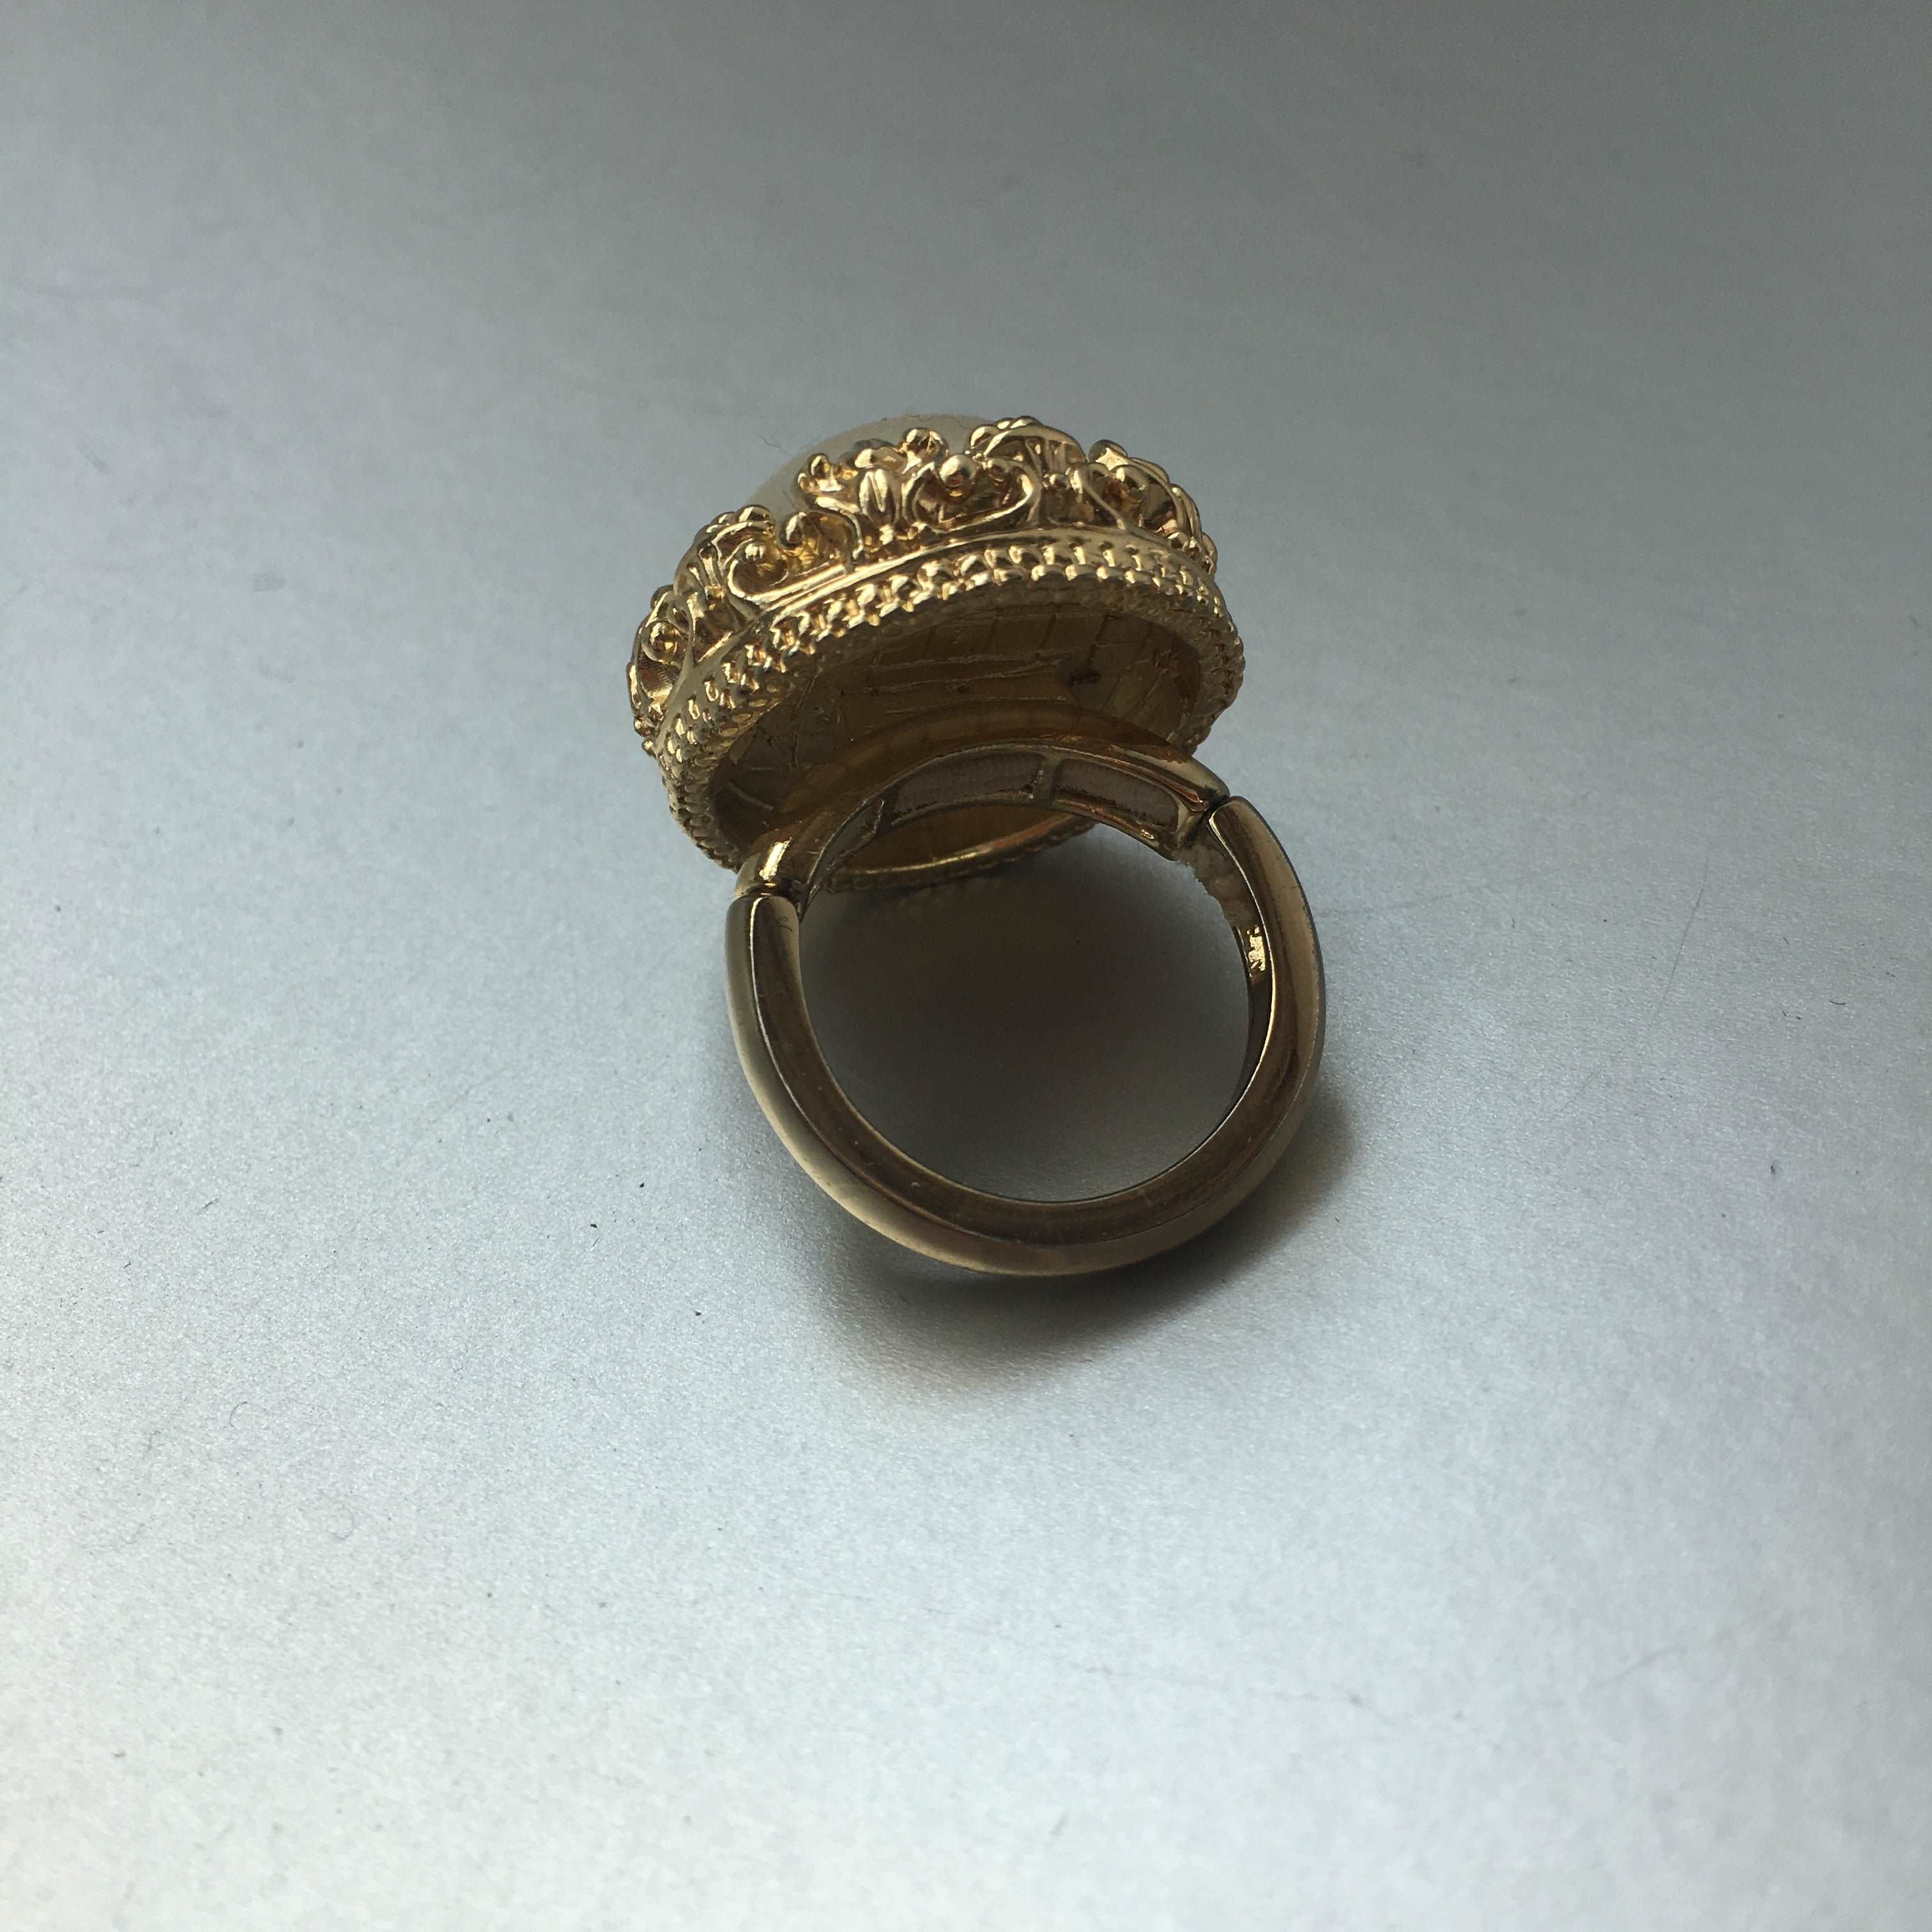 Big Pearl Cocktail Ring